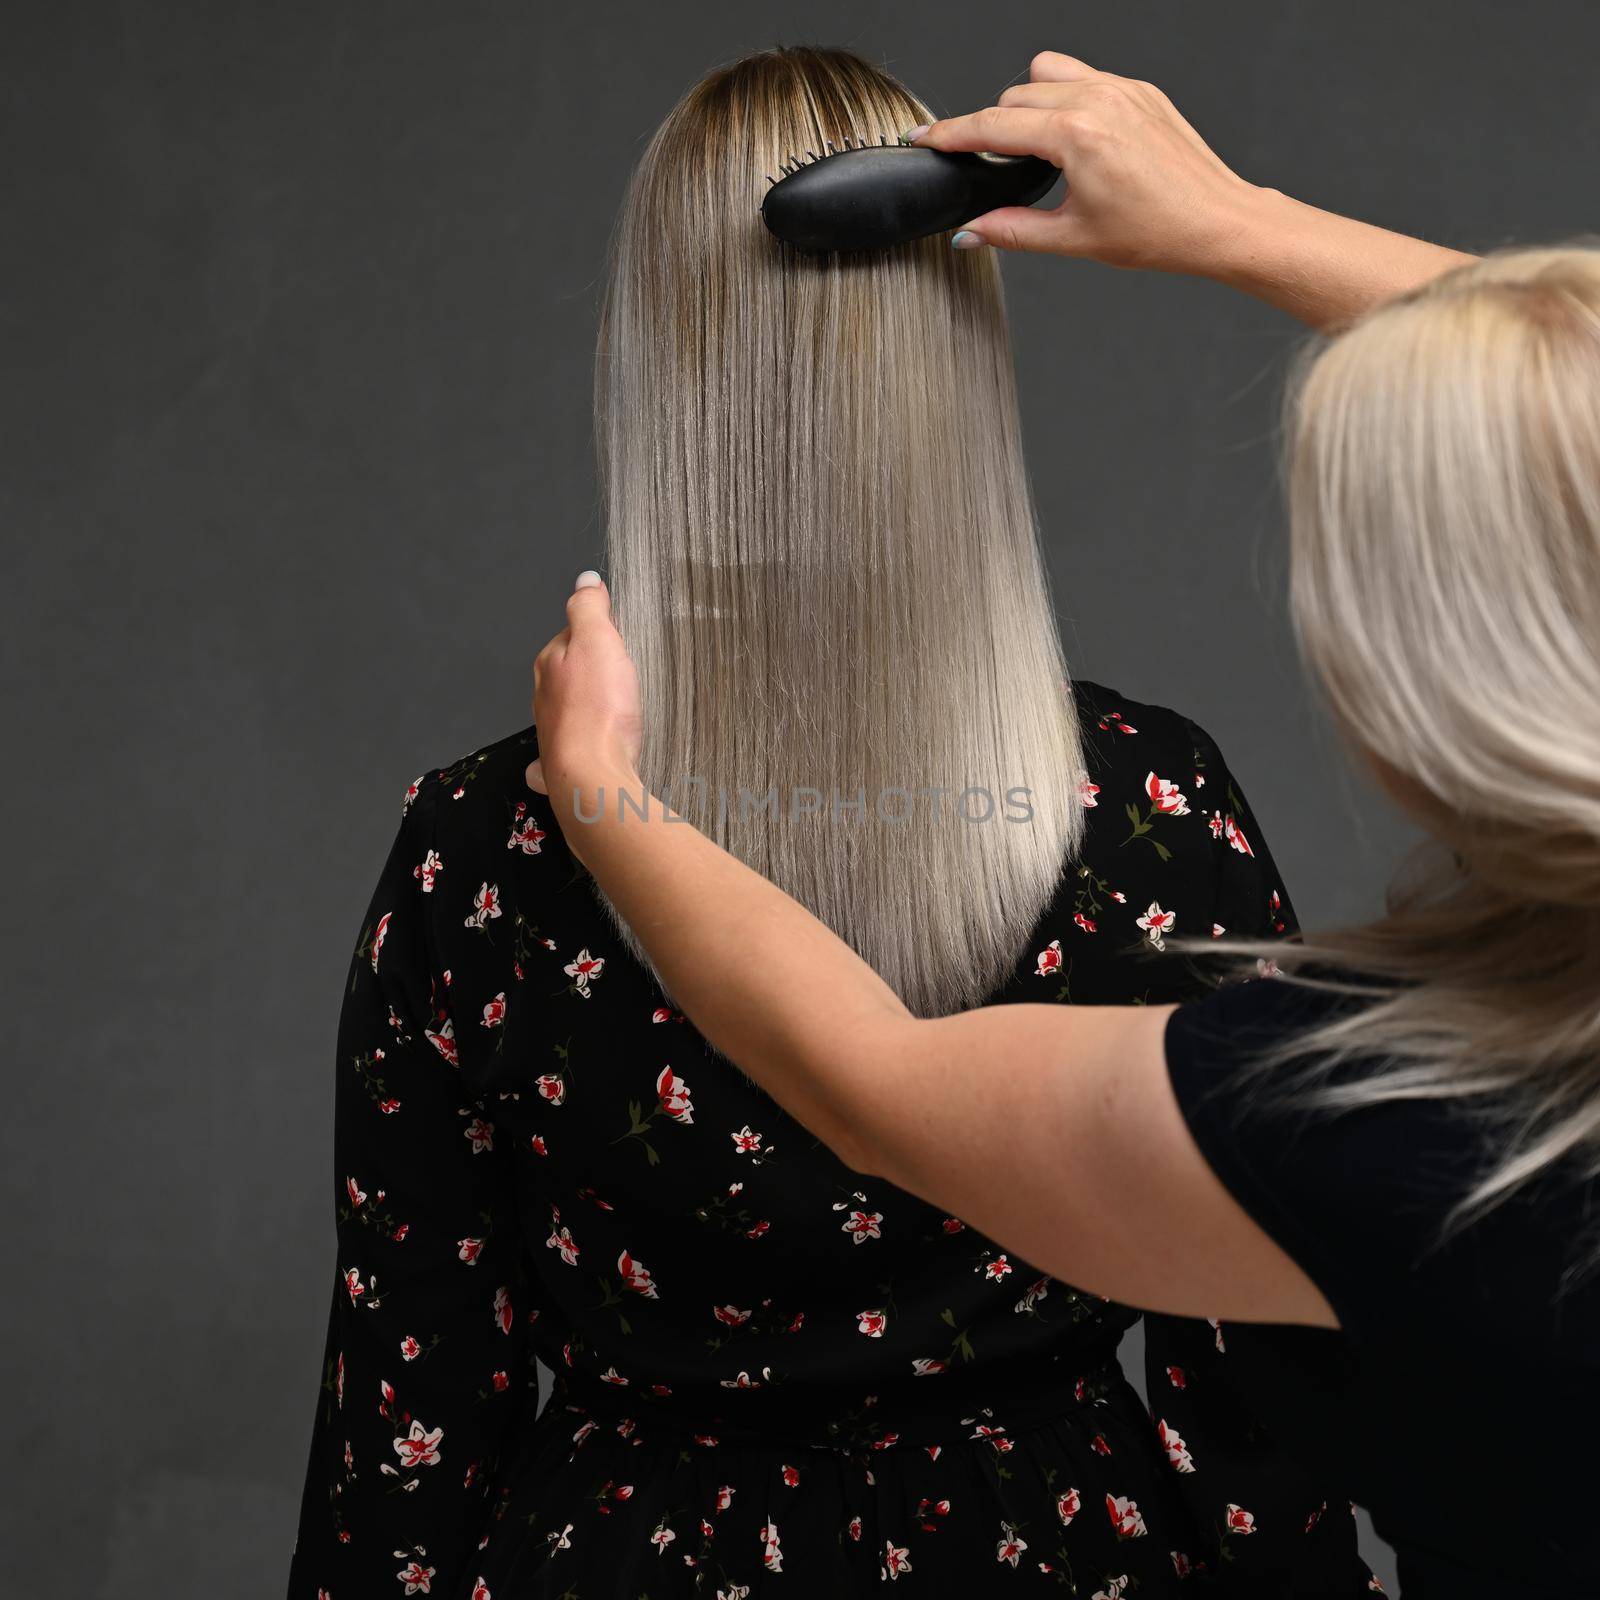 Hairdresser's hands combing model's hair from behind by chichaevstudio